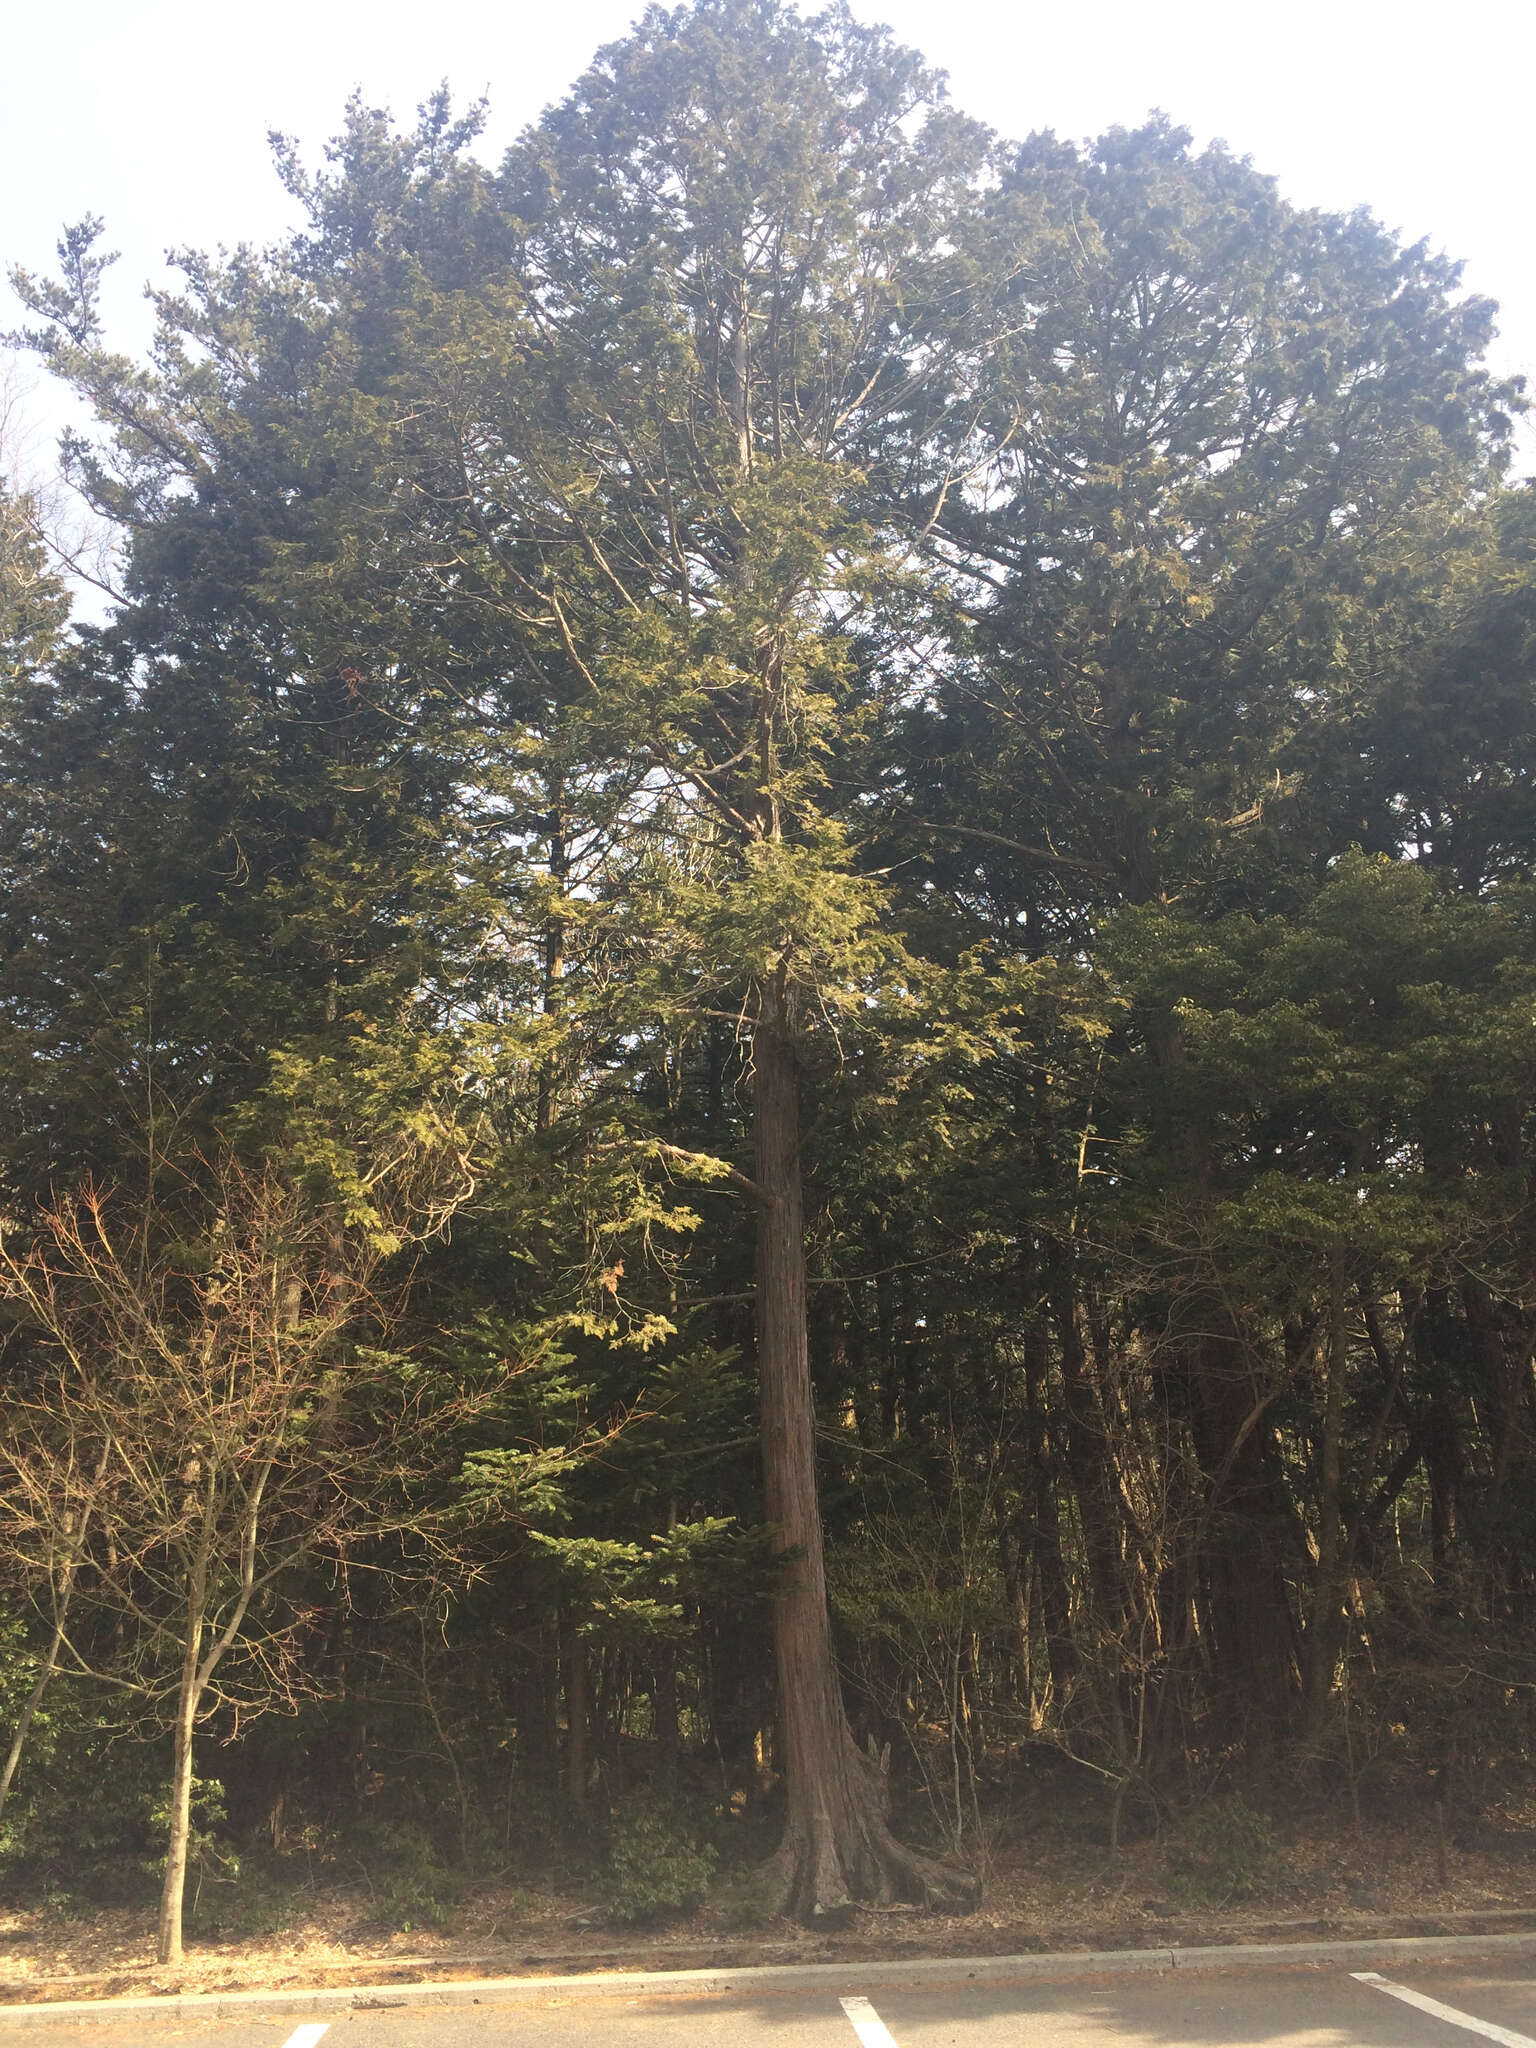 Image of Hinoki Cypress